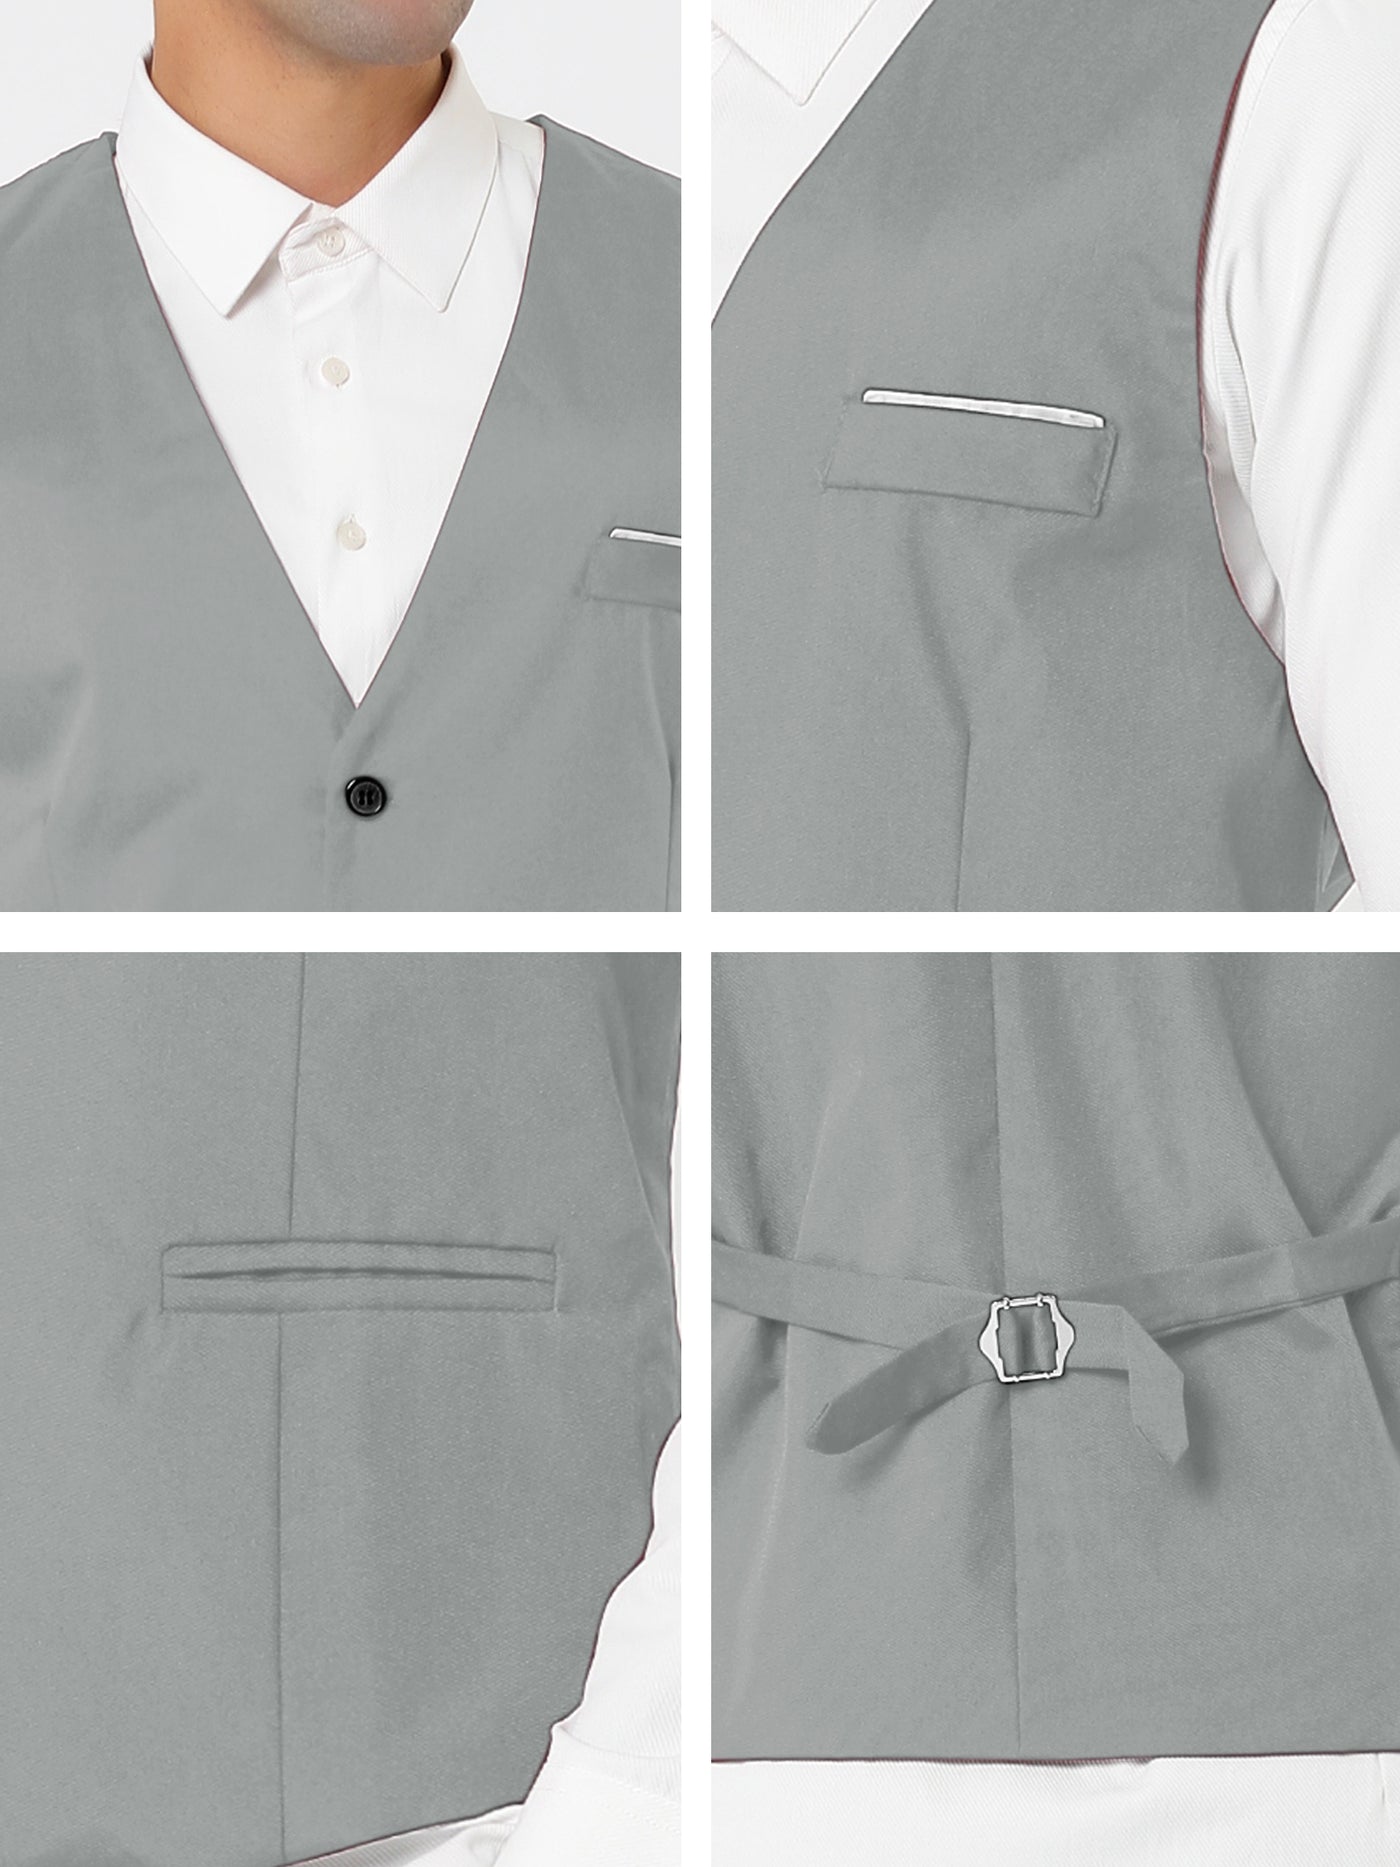 Bublédon Solid V Neck Waistcoat Formal Business Suit Vest